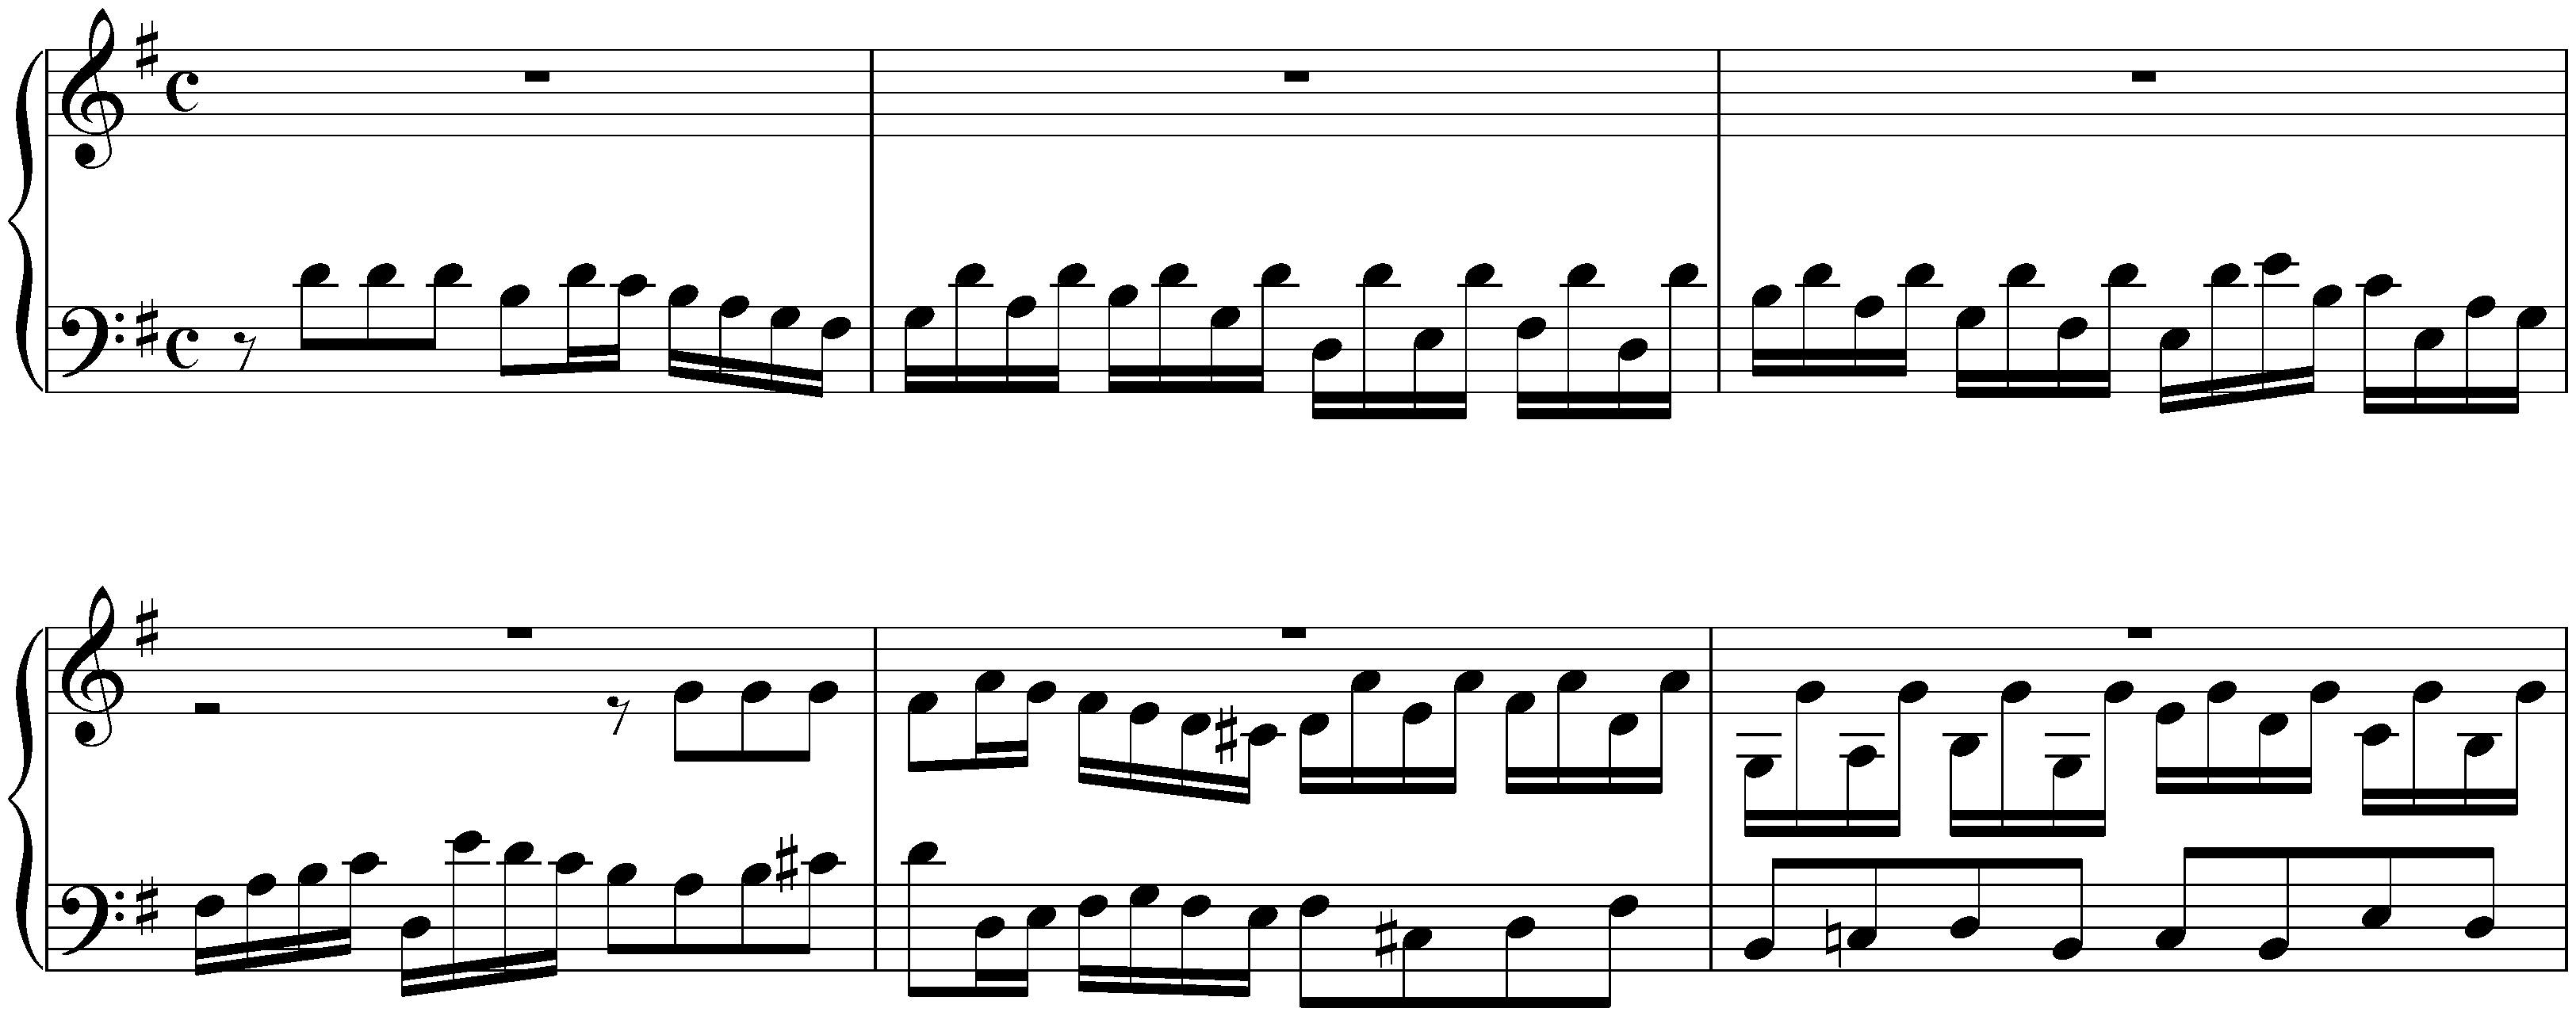 Fugue in G major, BWV Anh. 92